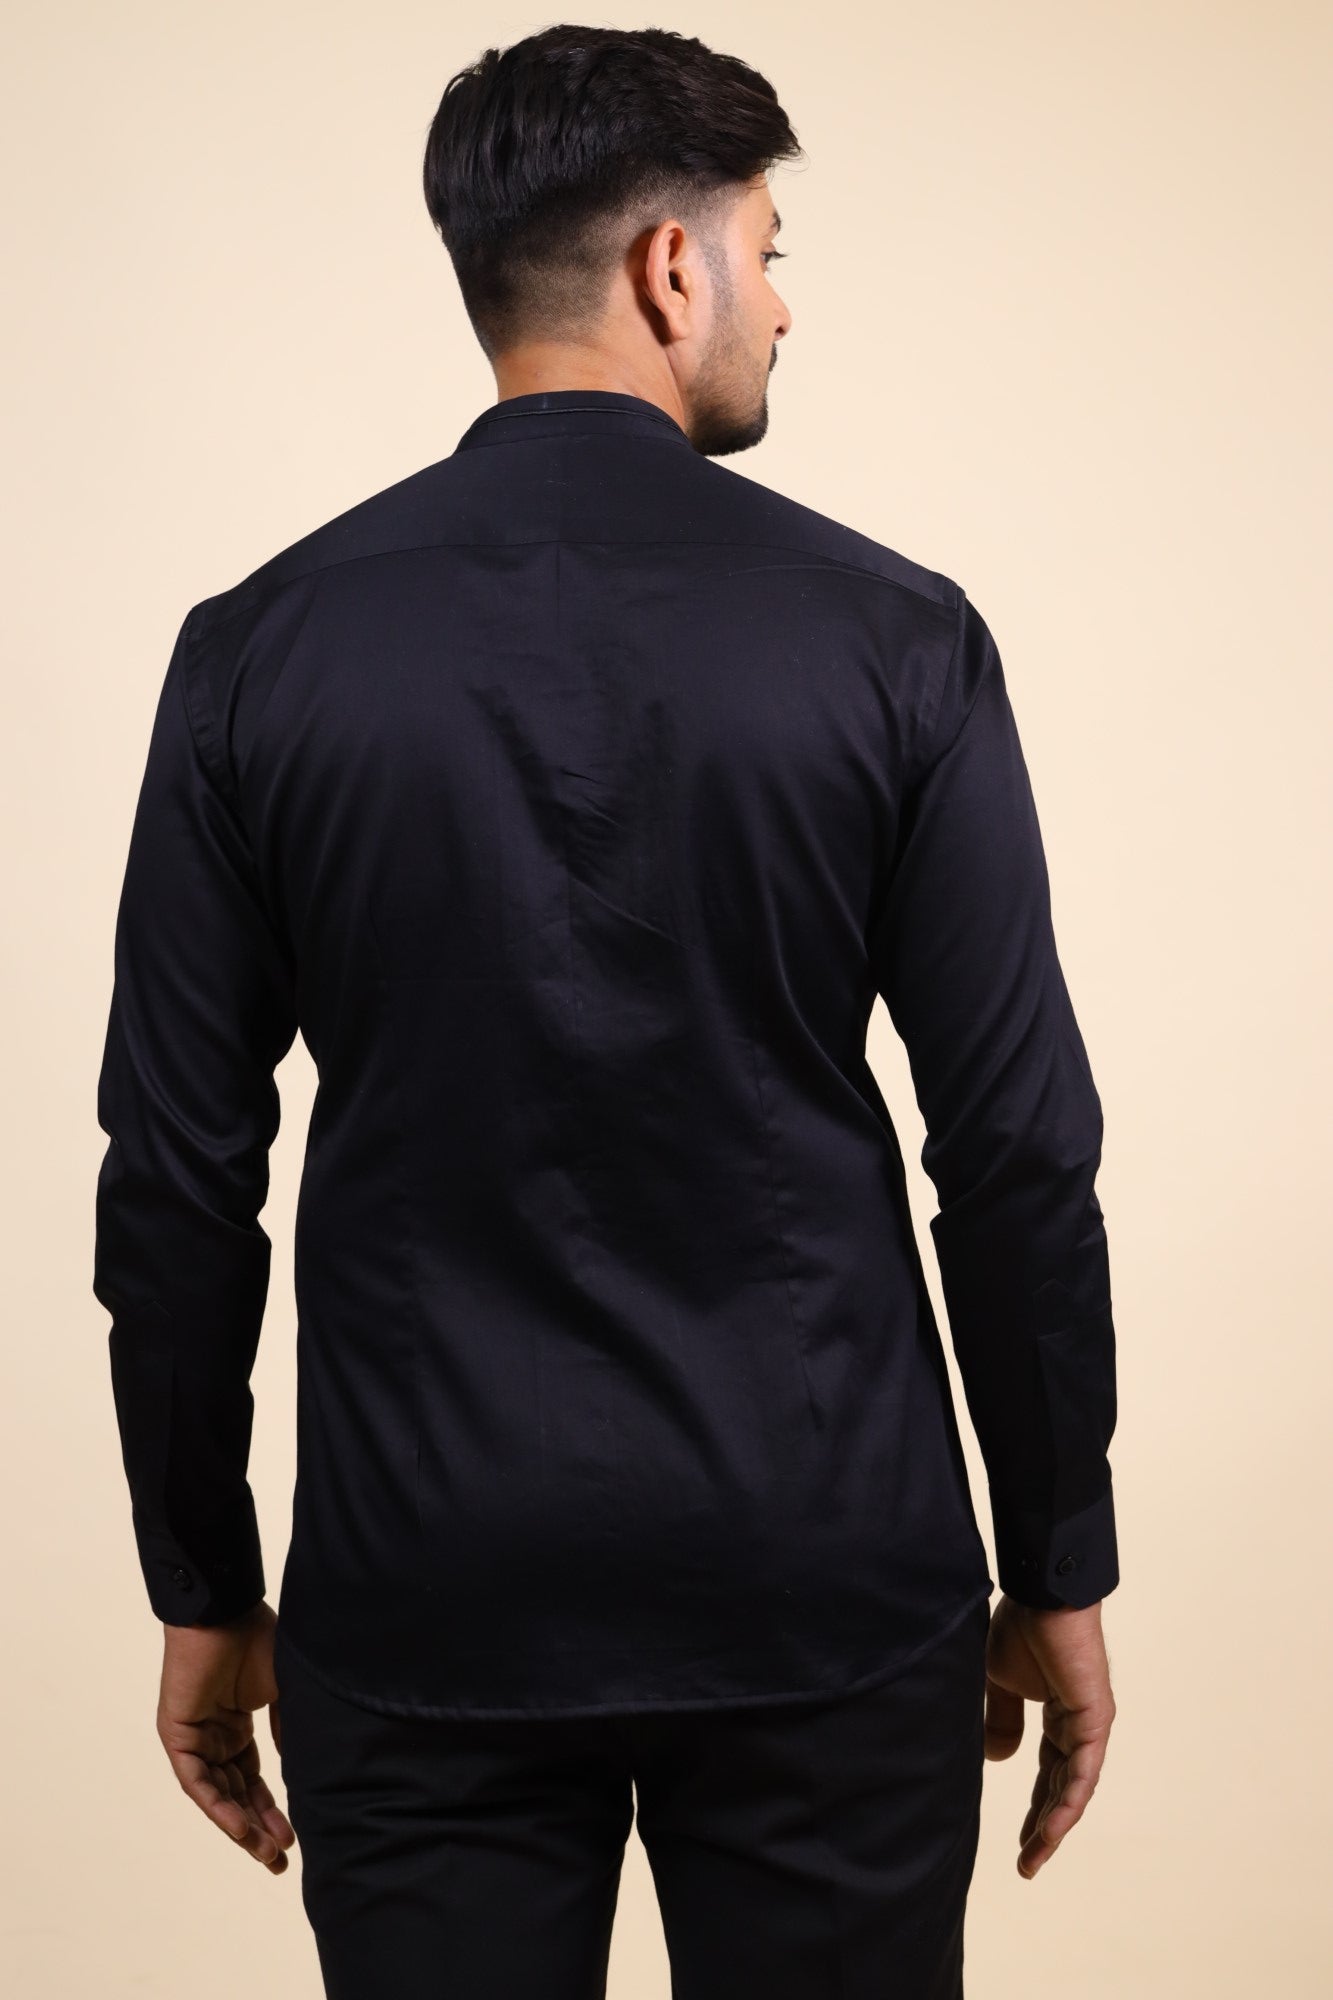 Men's Black Color Dirdum Black Designer Shirt Full Sleeves Casual Shirt - Hilo Design